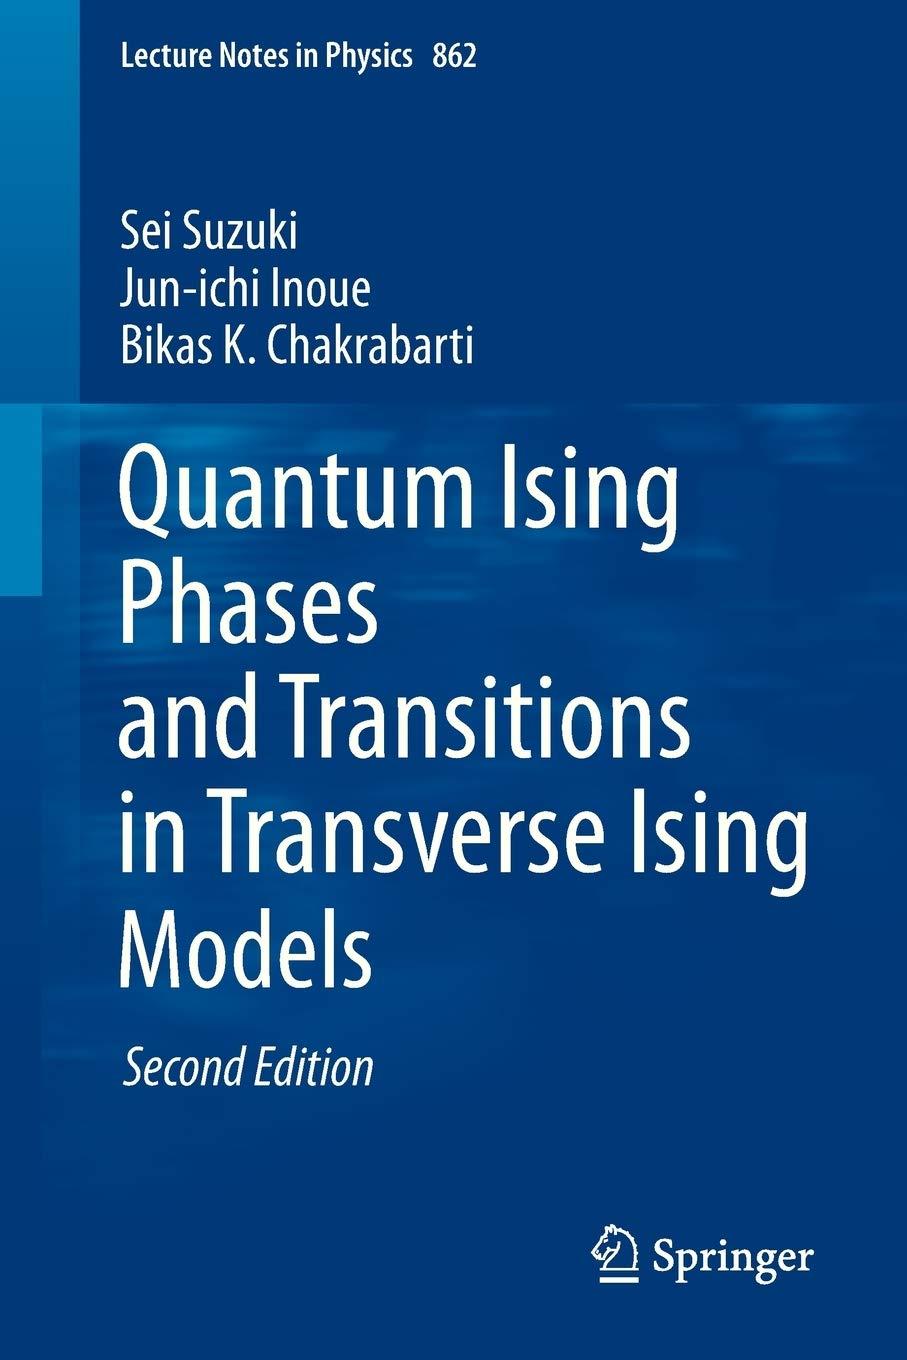 quantum ising phases and transitions in transverse ising models 2nd edition sei suzuki, jun-ichi inoue, bikas